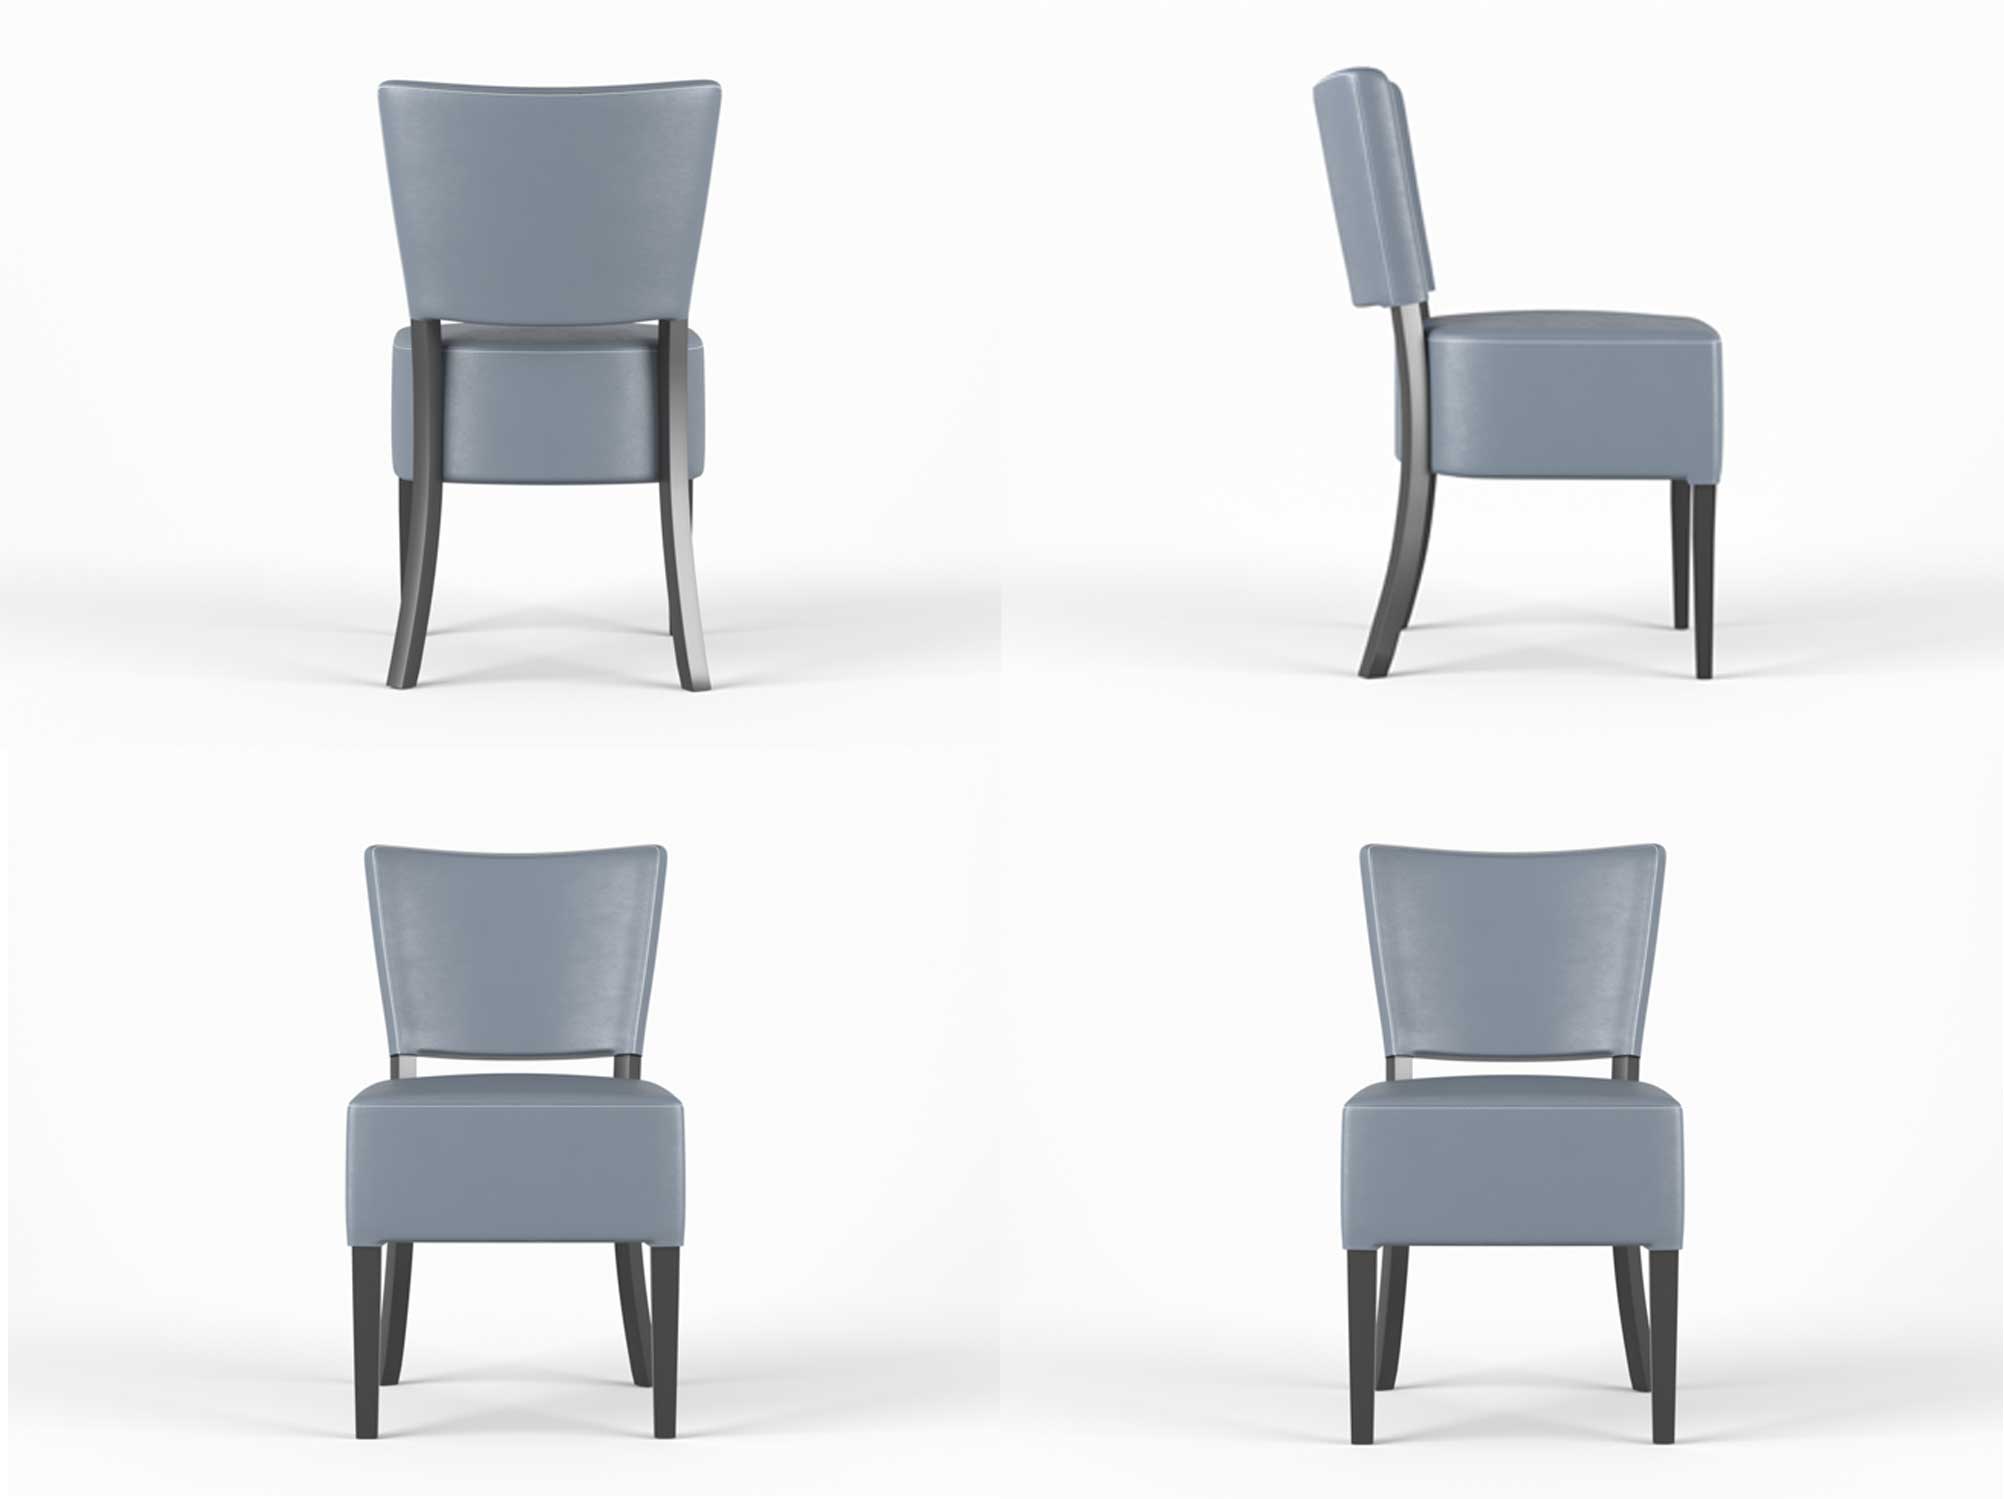 3D rendering of modern minimalist chair design